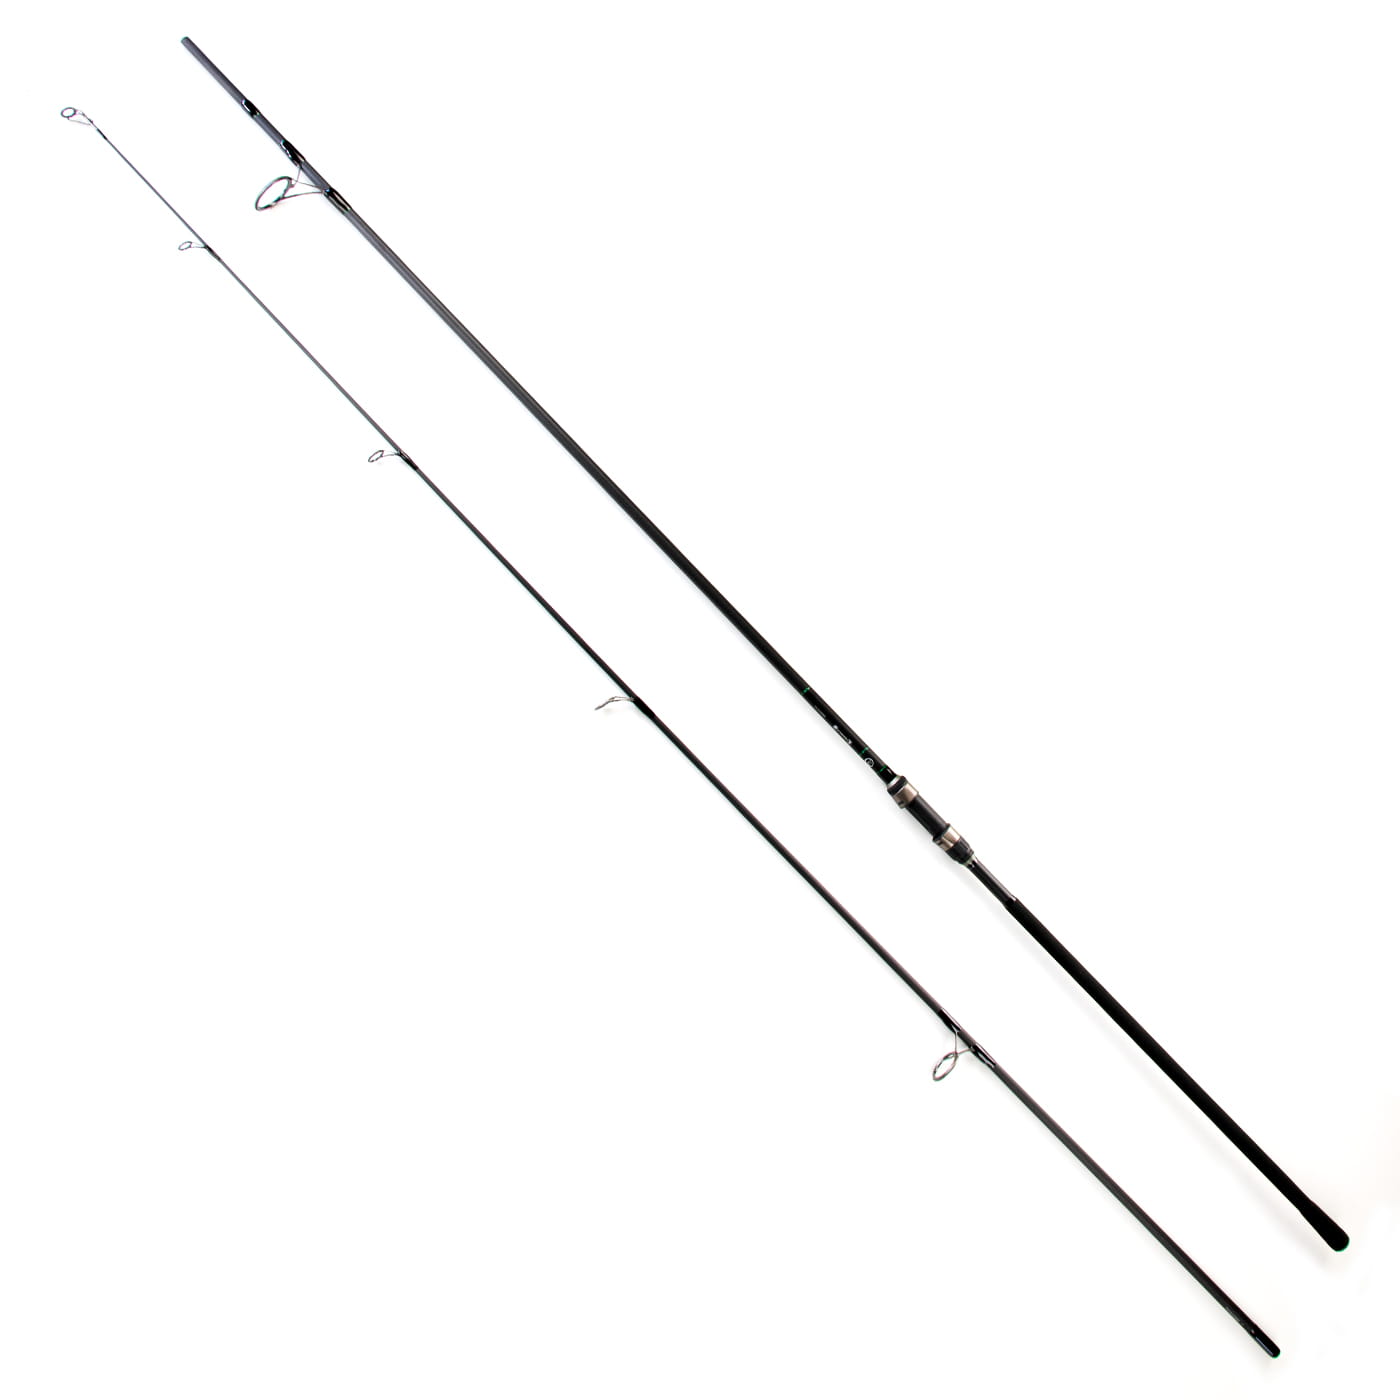 2 x Carp Fishing Stalker Rods & Reels Set Up With Tackle set Ideal For Stalking 